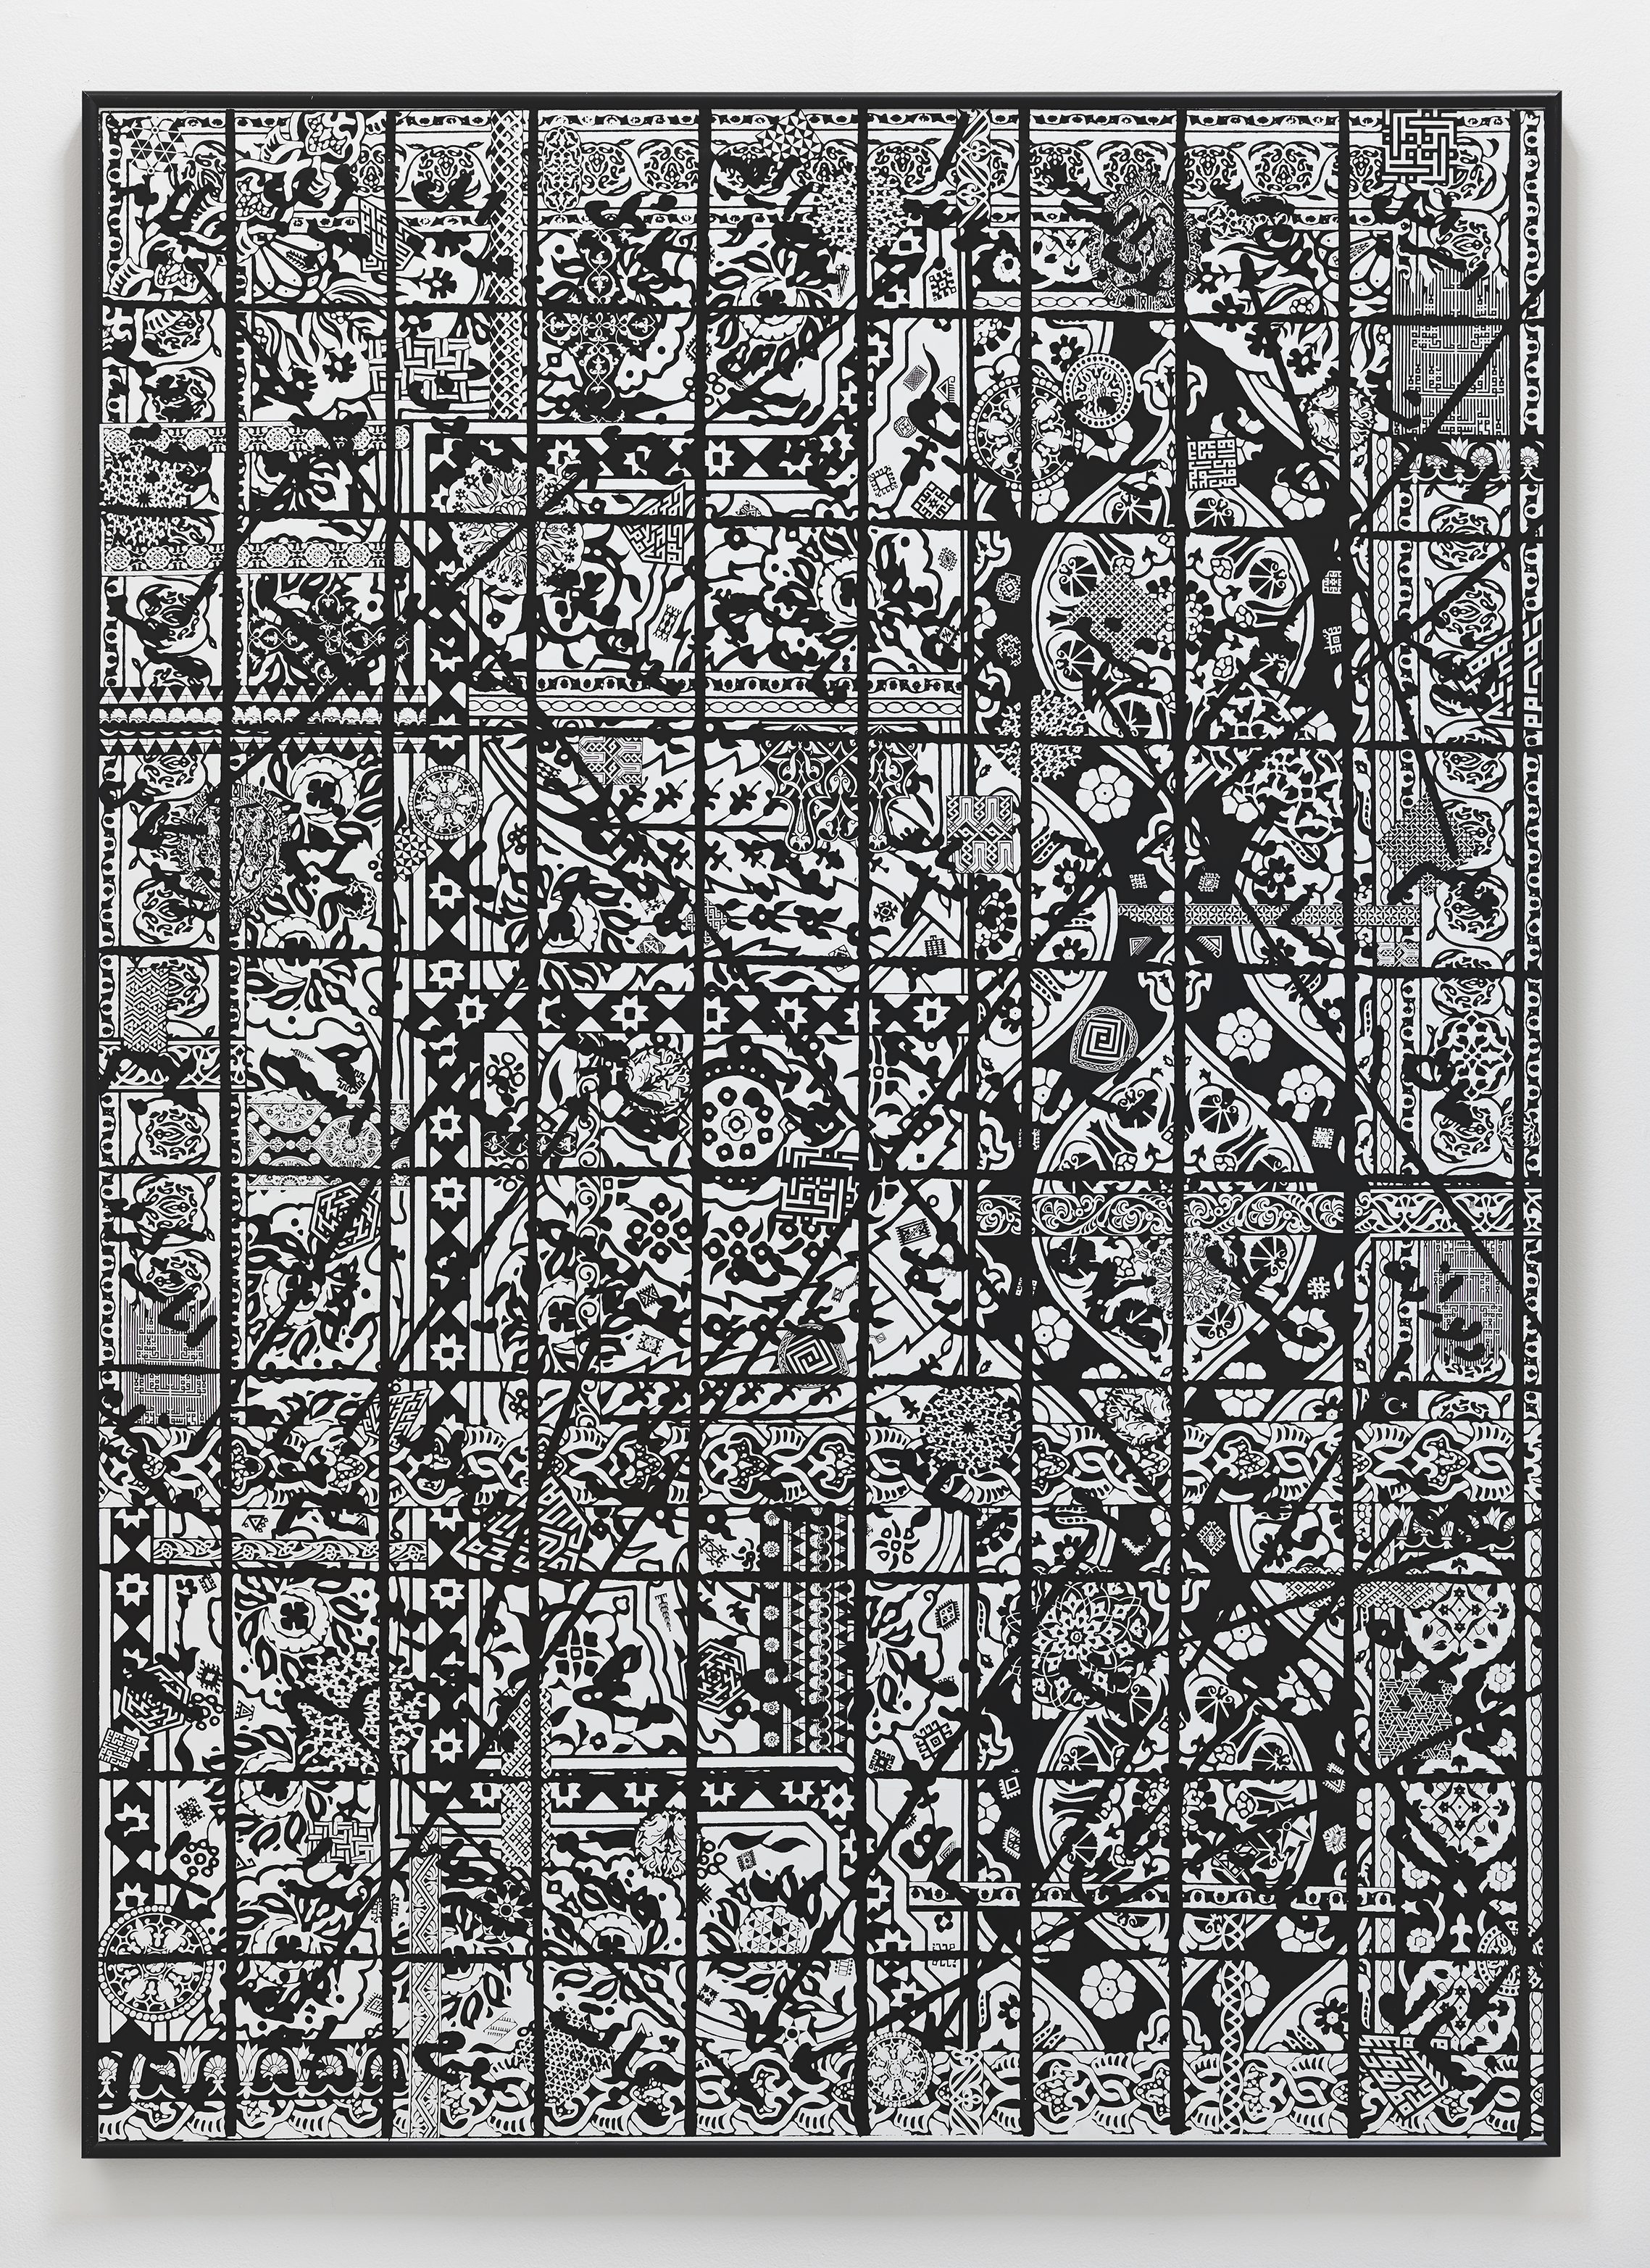 Peter Nagy, Fundamentalist Décor, 1990, Enamel on steel, 67h x 48w in., A.P., Edition of 3